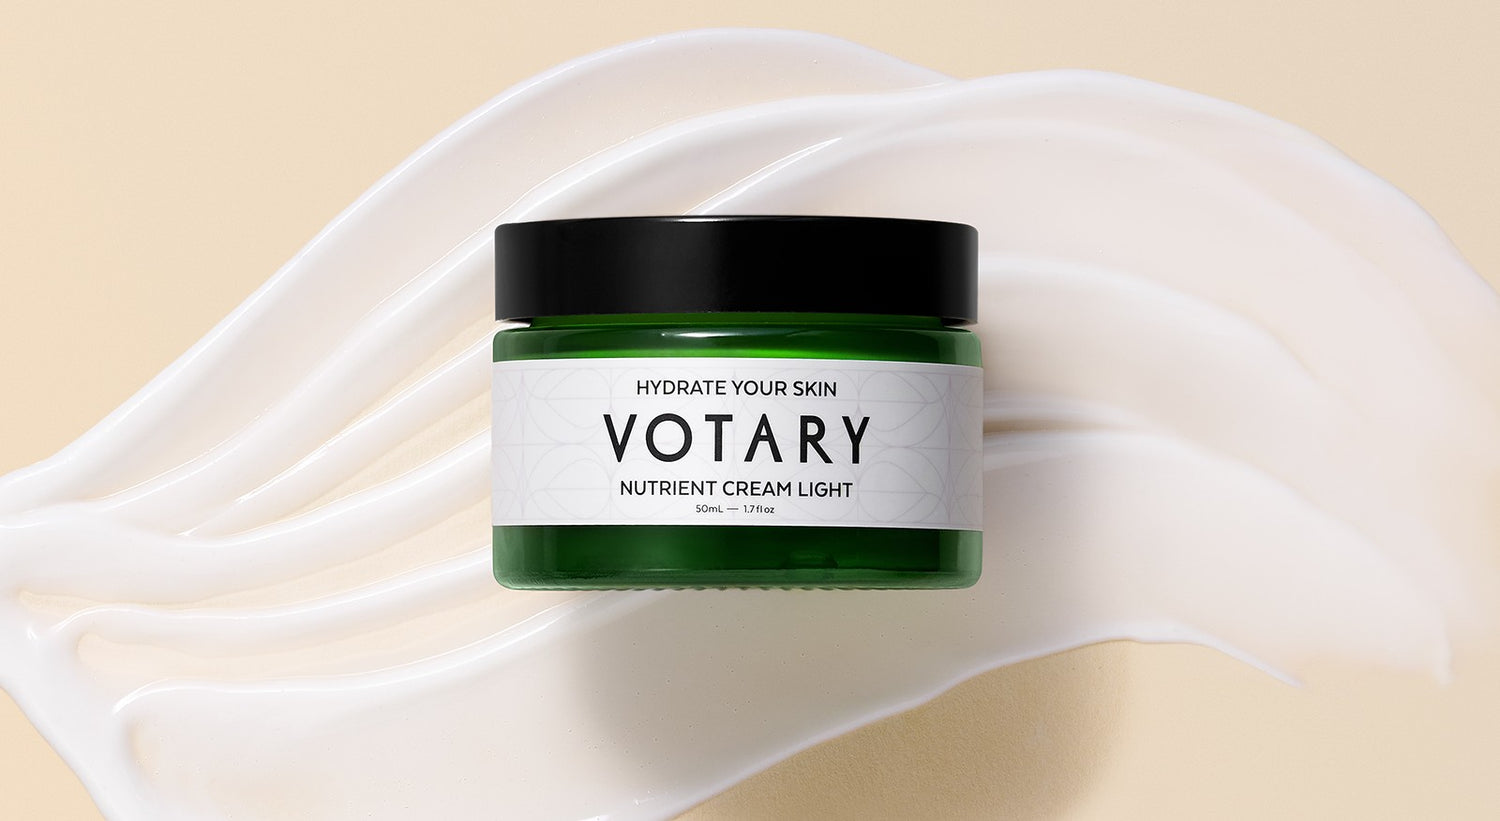 Votary Nutrient Cream Light